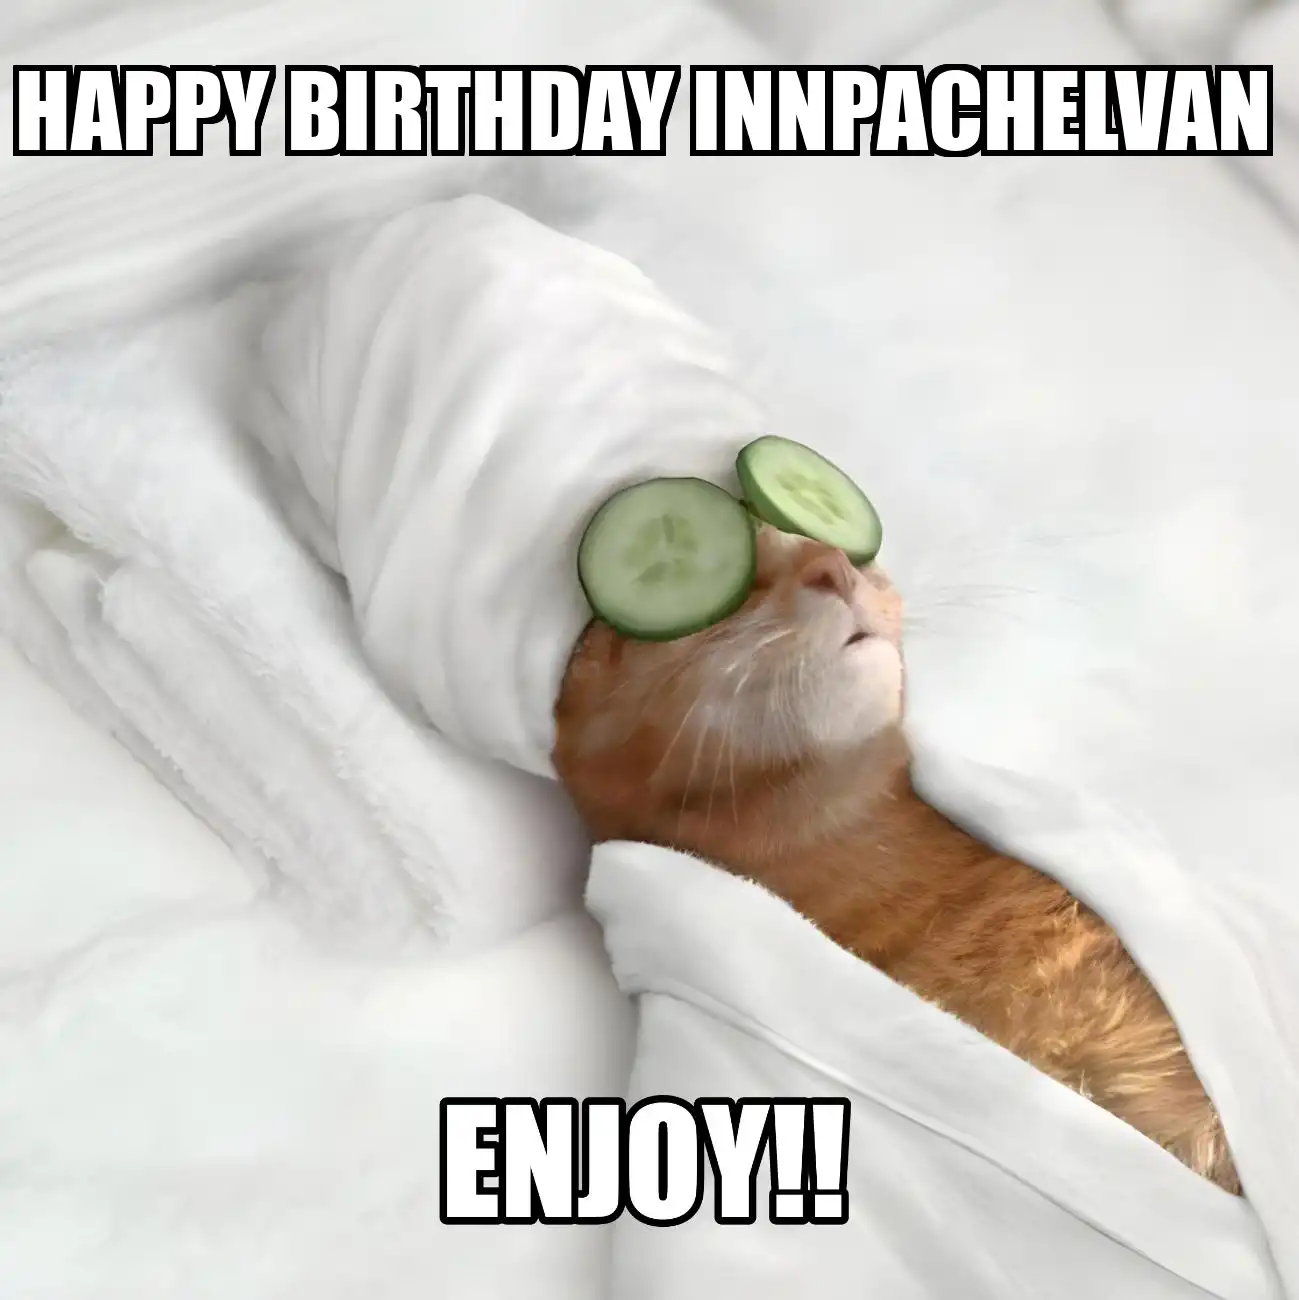 Happy Birthday Innpachelvan Enjoy Cat Meme